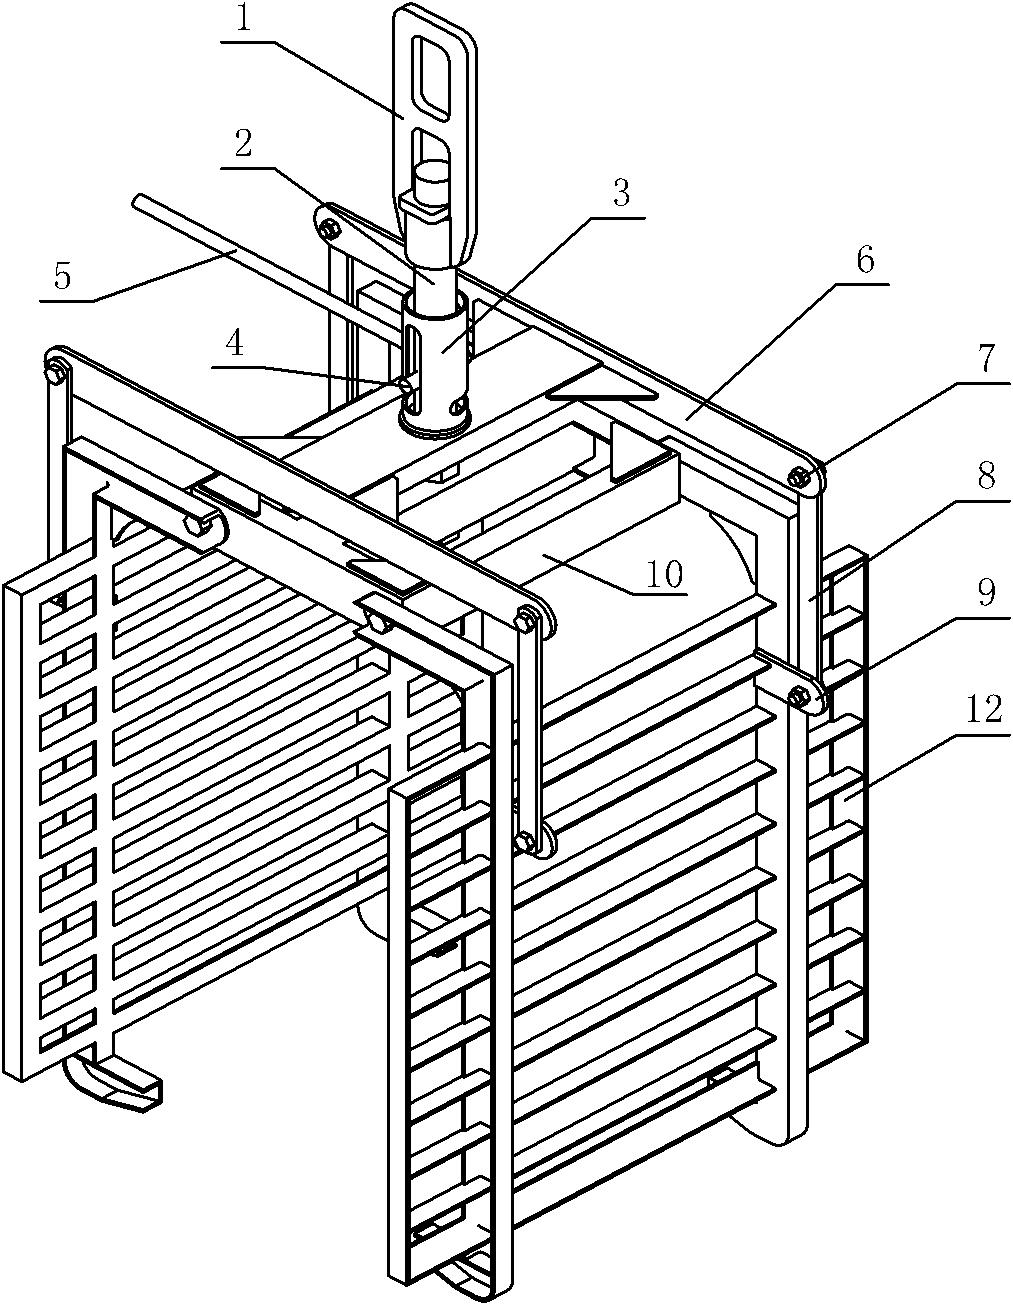 Semi-automatic brick hanging fixture